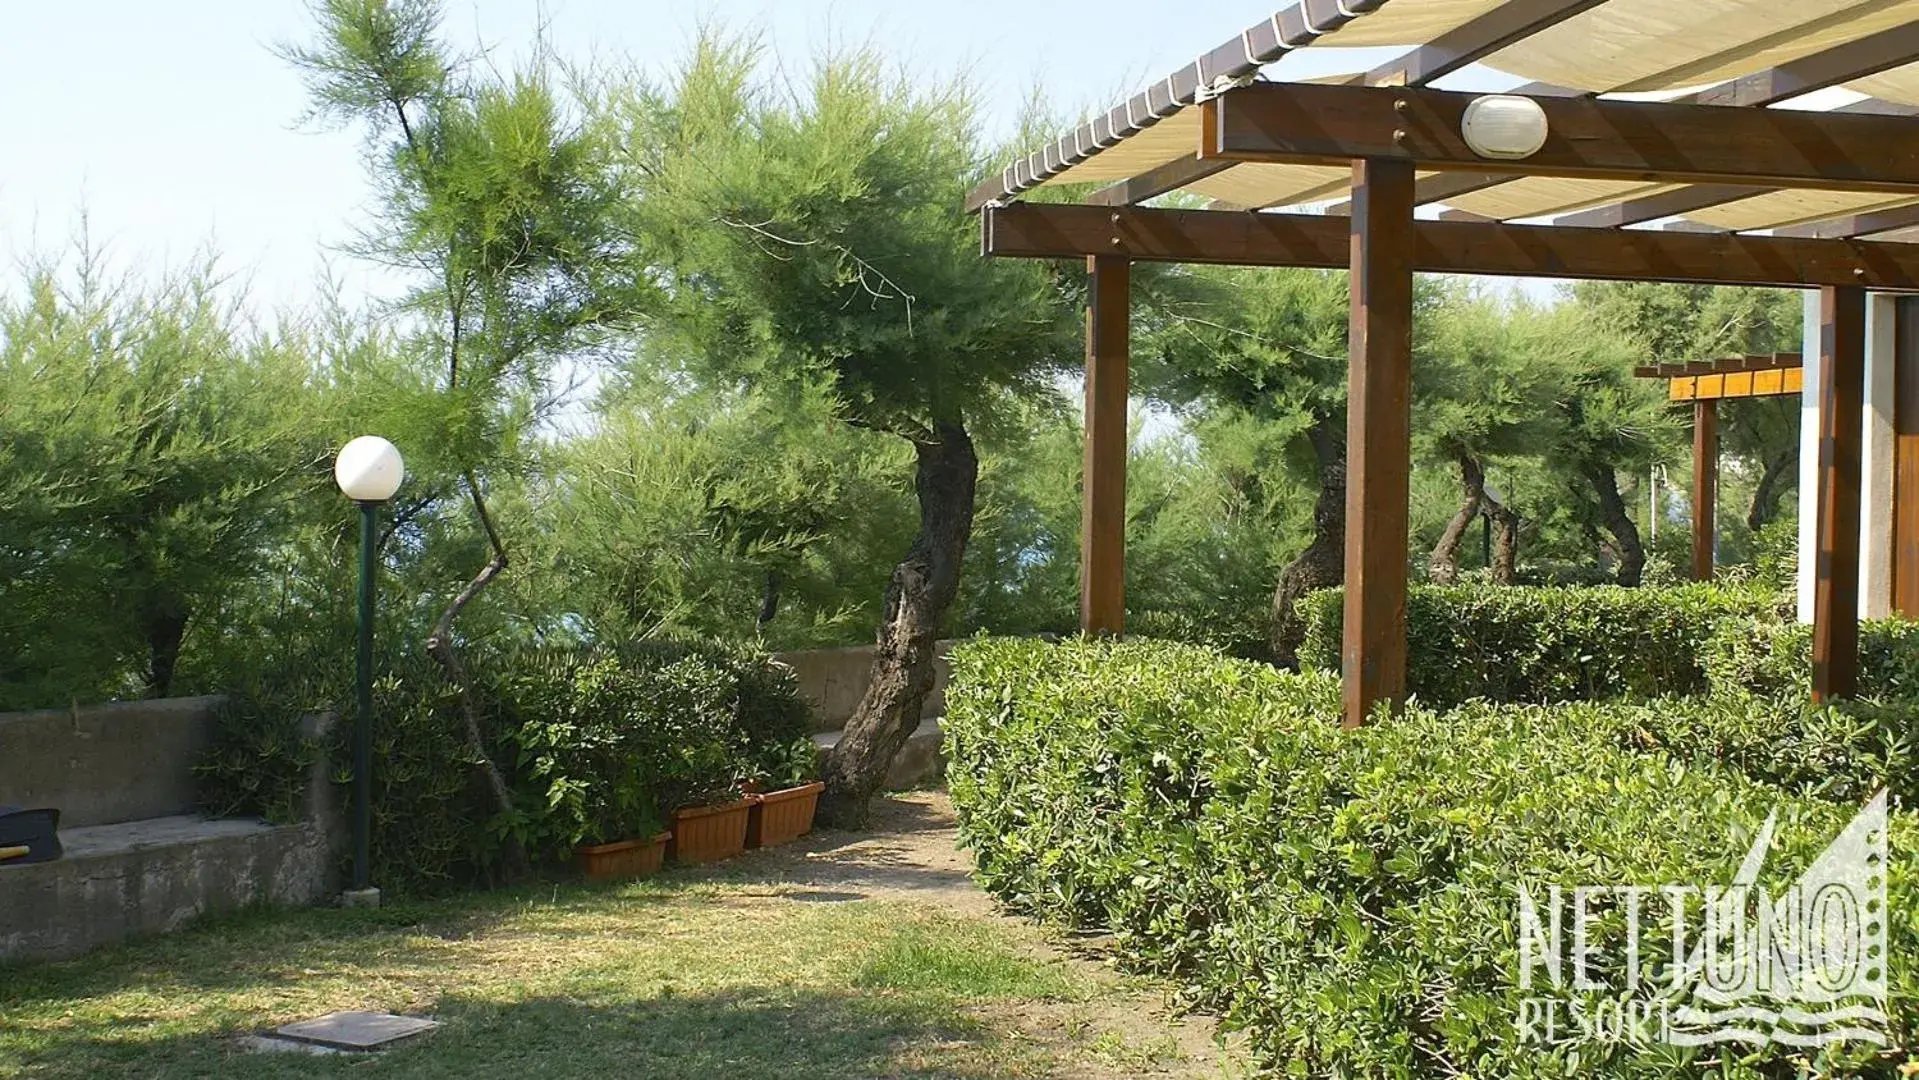 Garden in Nettuno Resort